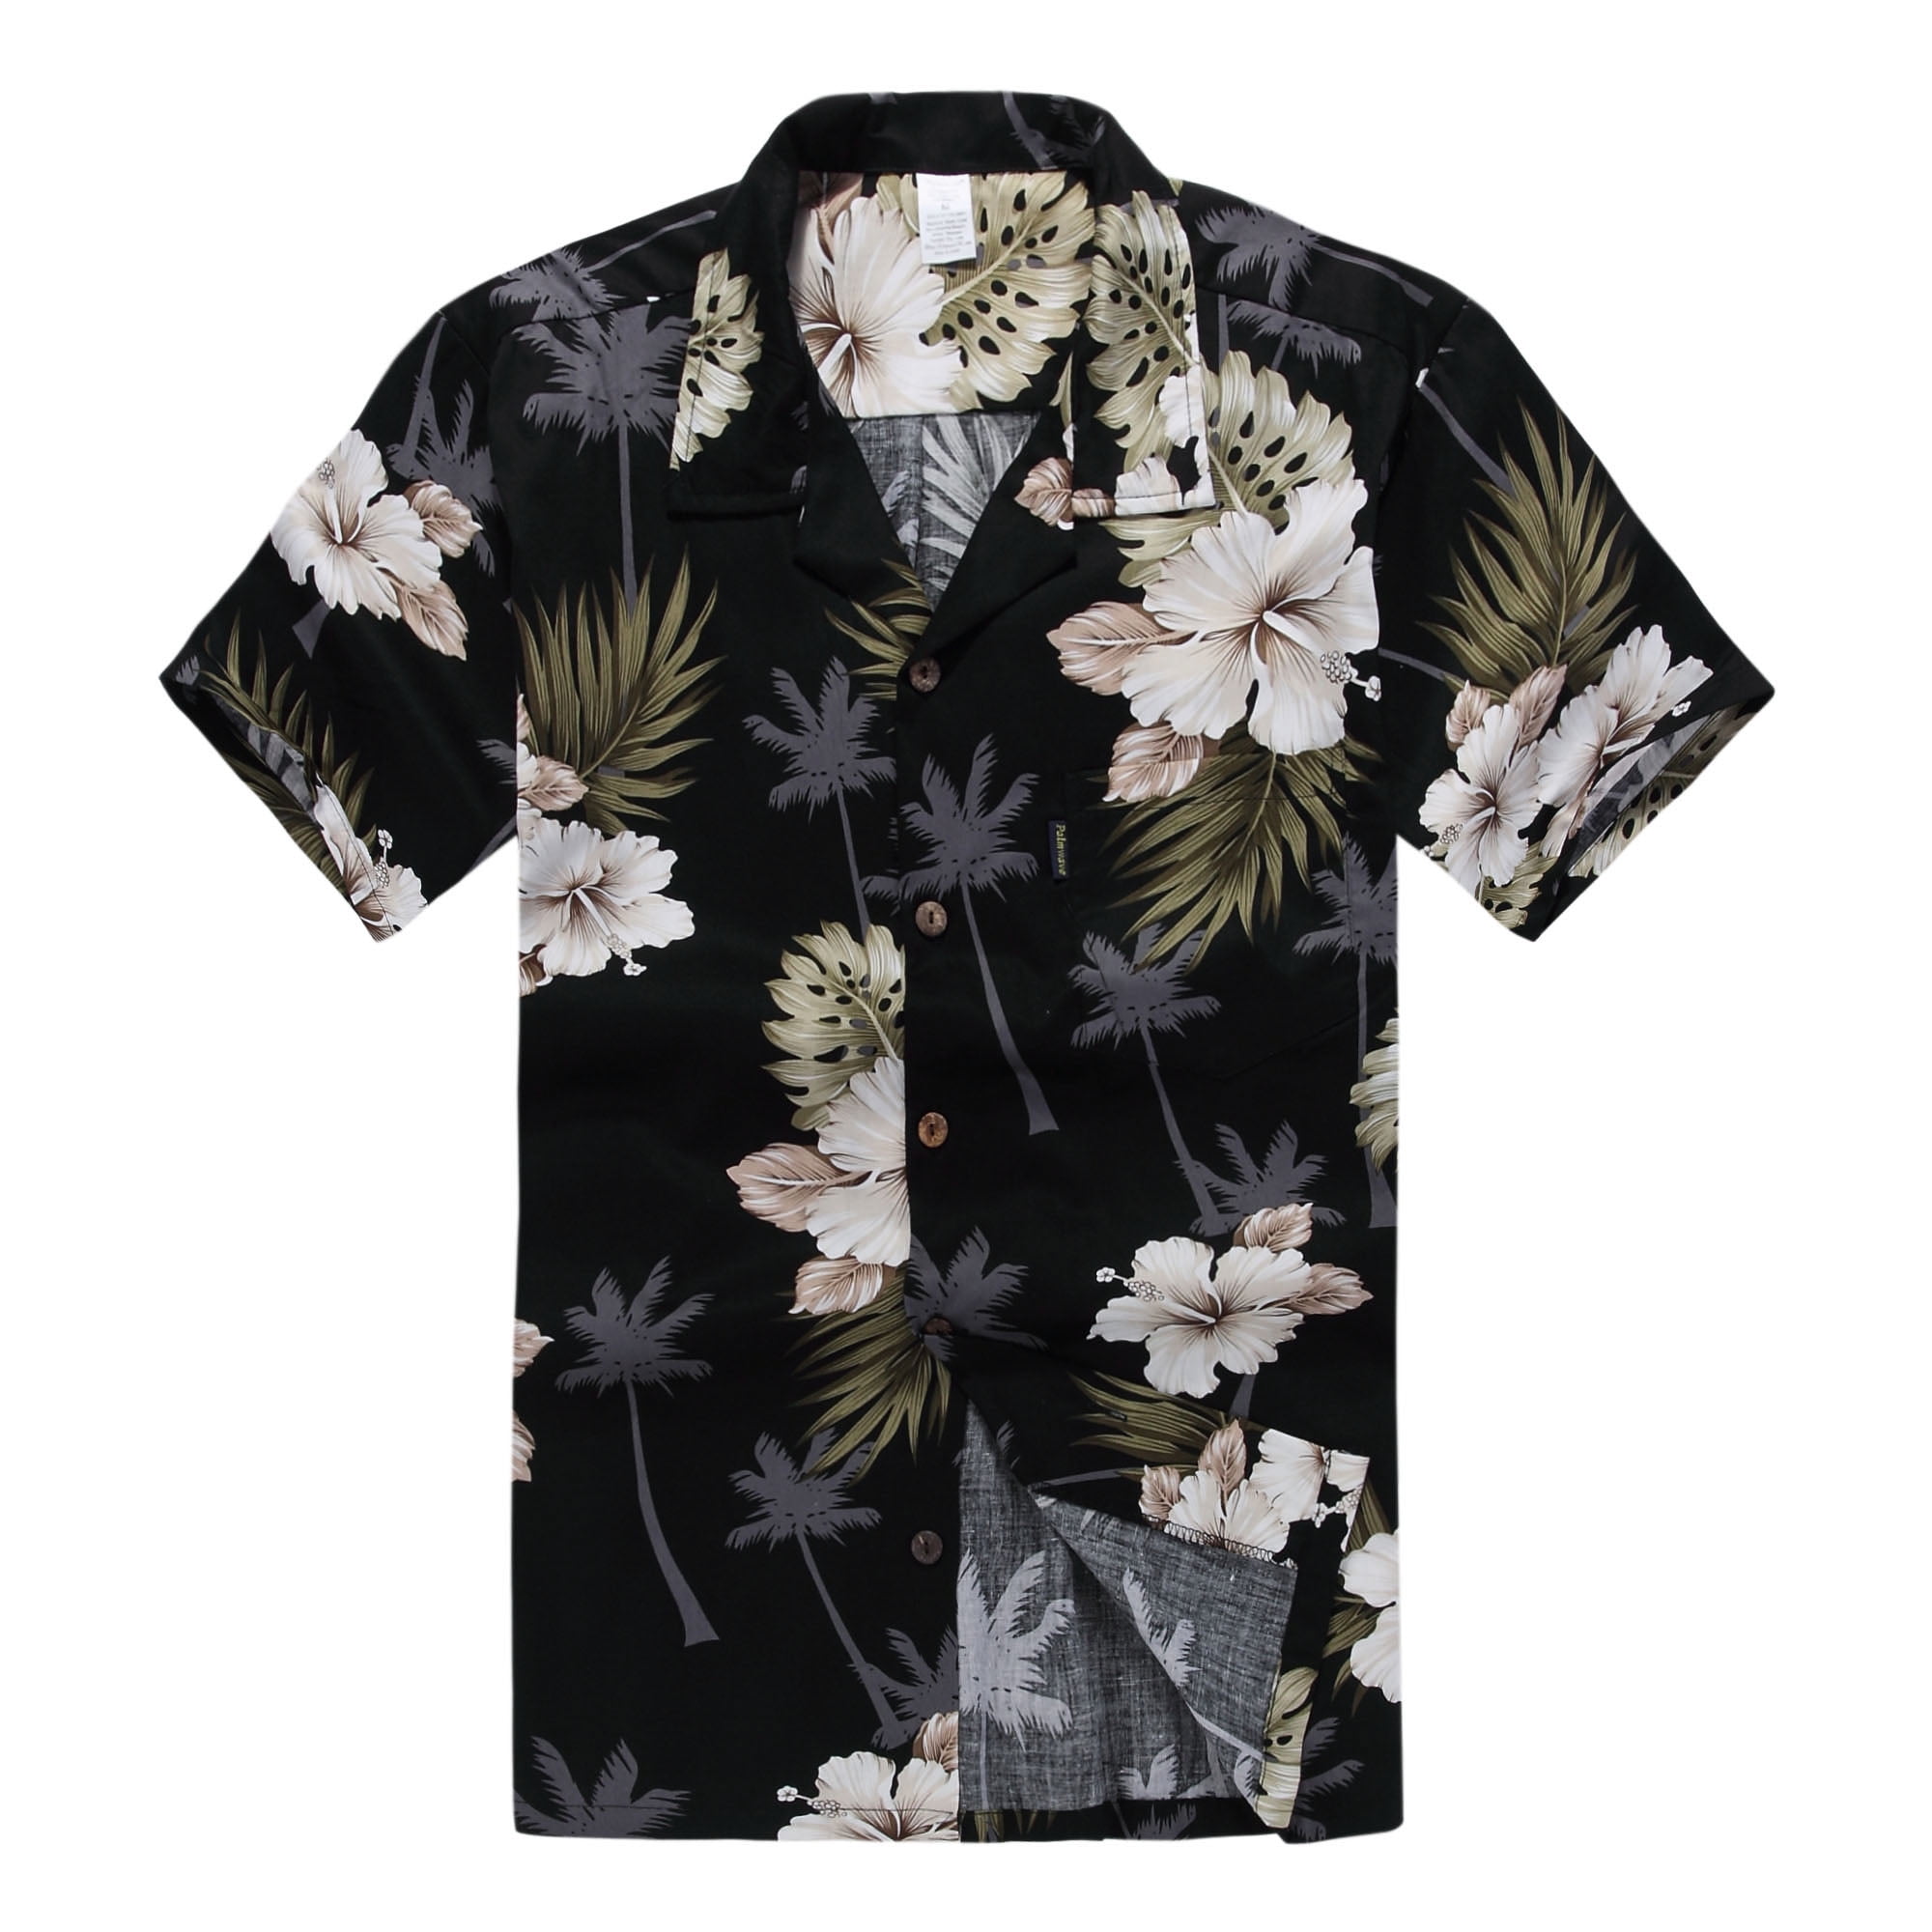  Hawaii  Hangover Hawaiian Shirt  Aloha Shirt  in Black Palm 